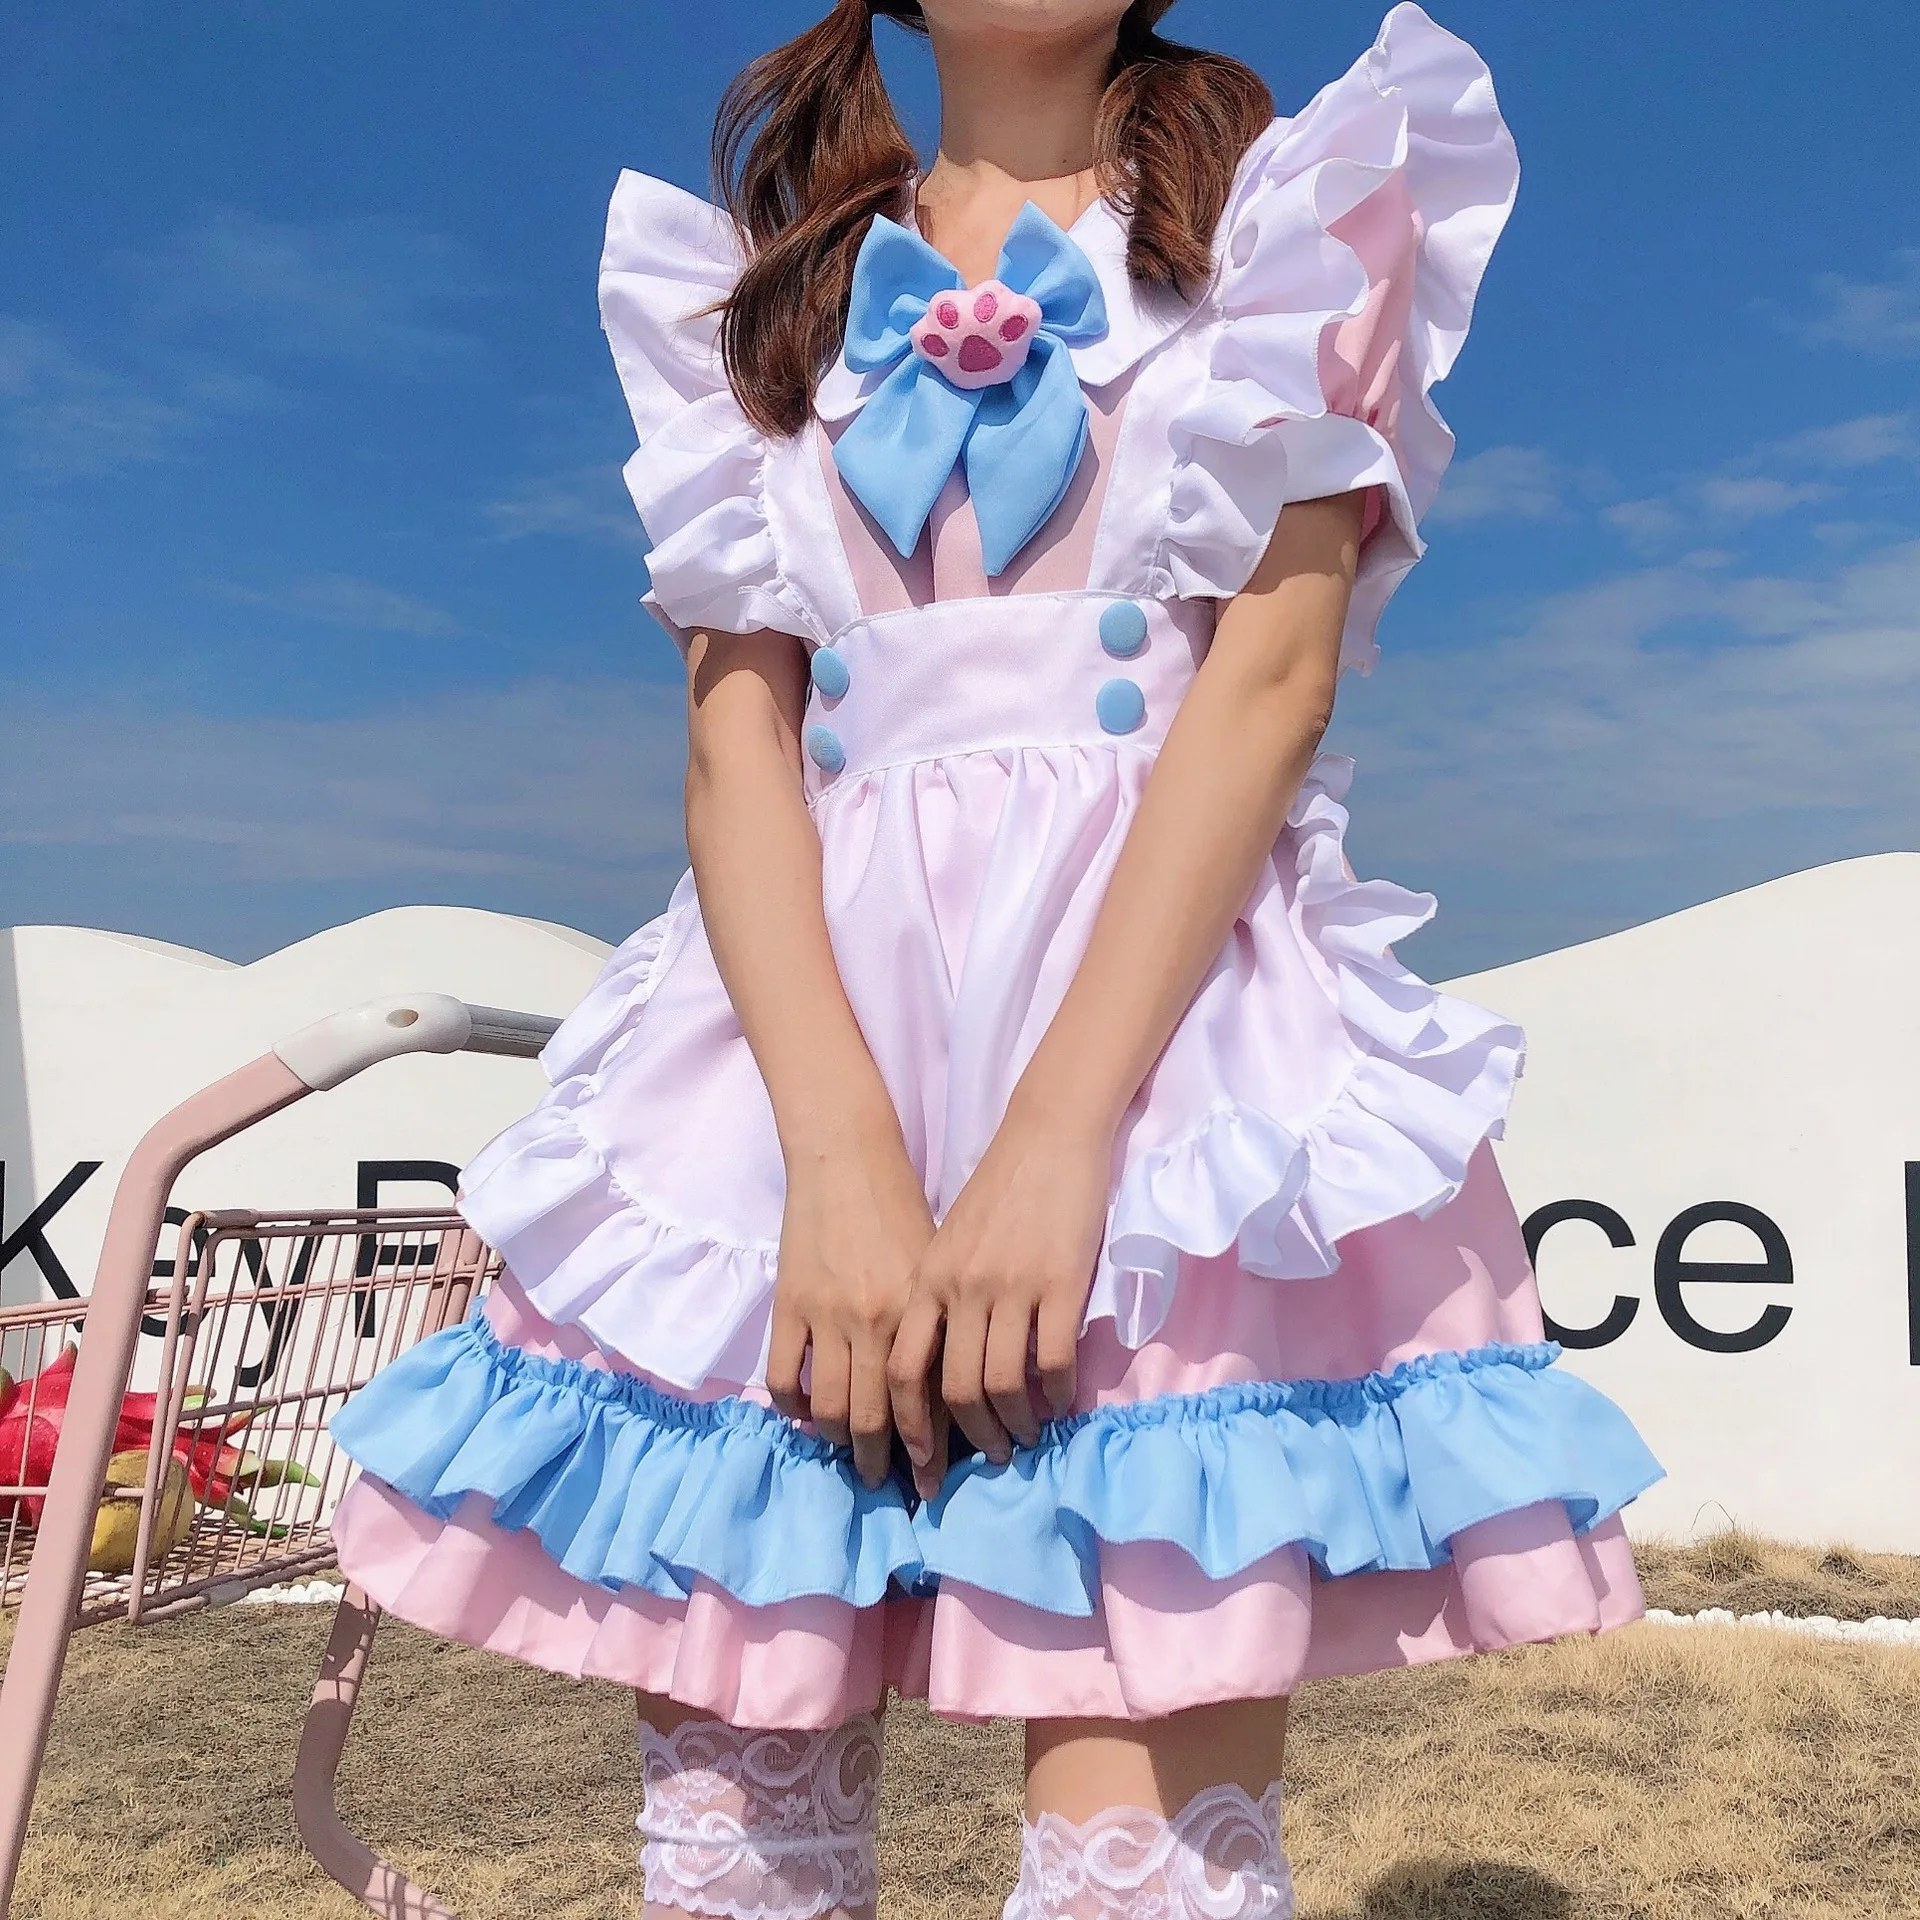 

Roupa de empregada feminina anime bonito gato rosa azul avental gato pata lolita vestidos cosplay traje conjunto completo mais